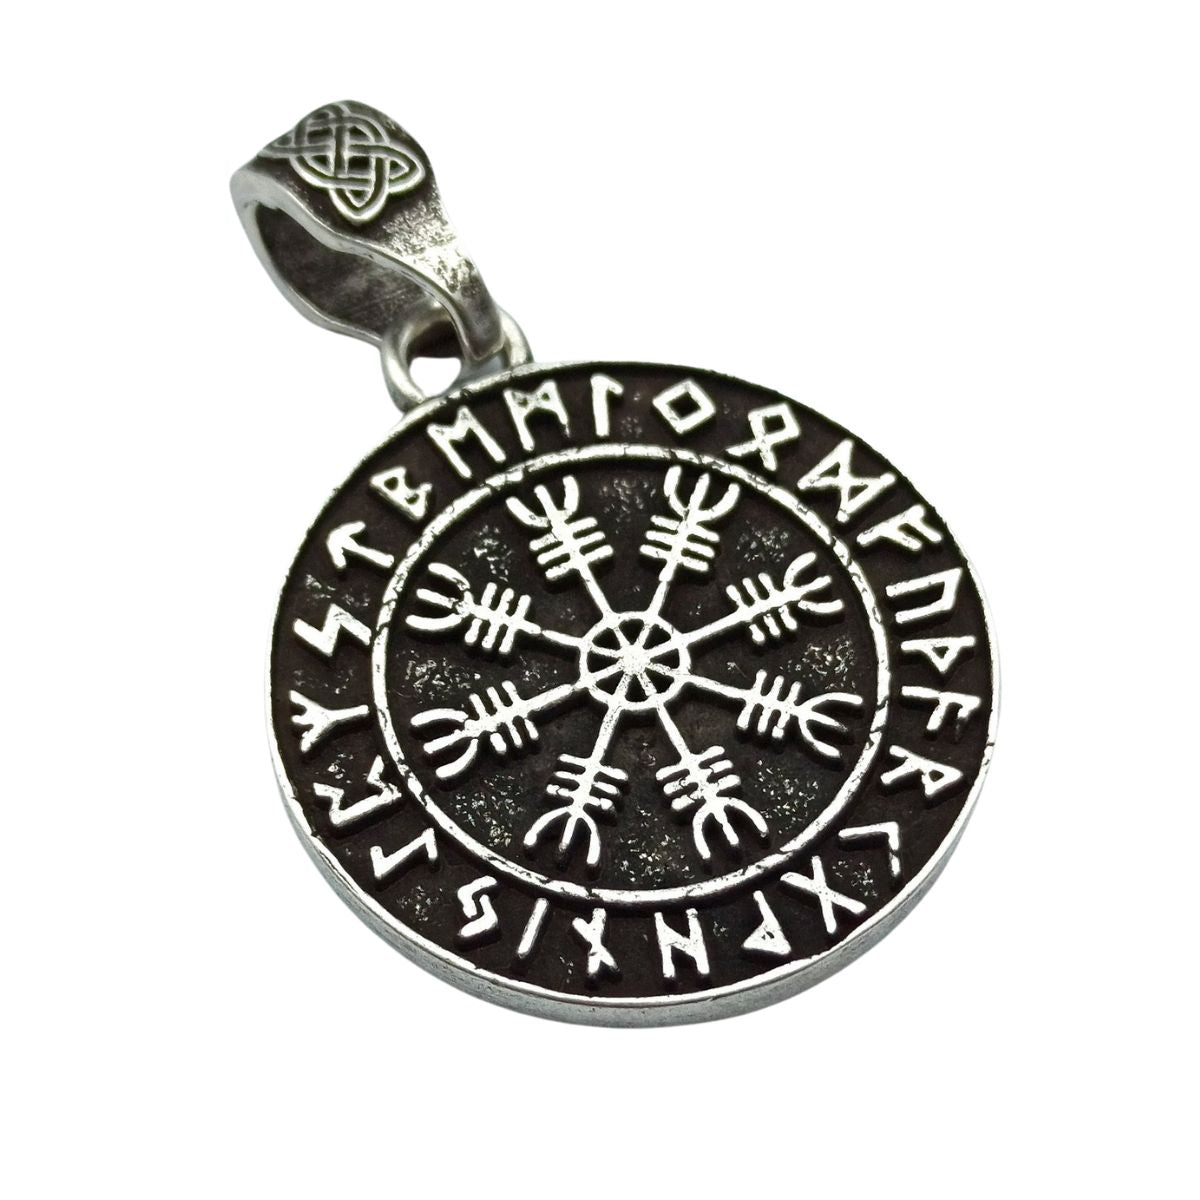 Aegishjalmur in circle of Elder Futhark runes silver plated pendant